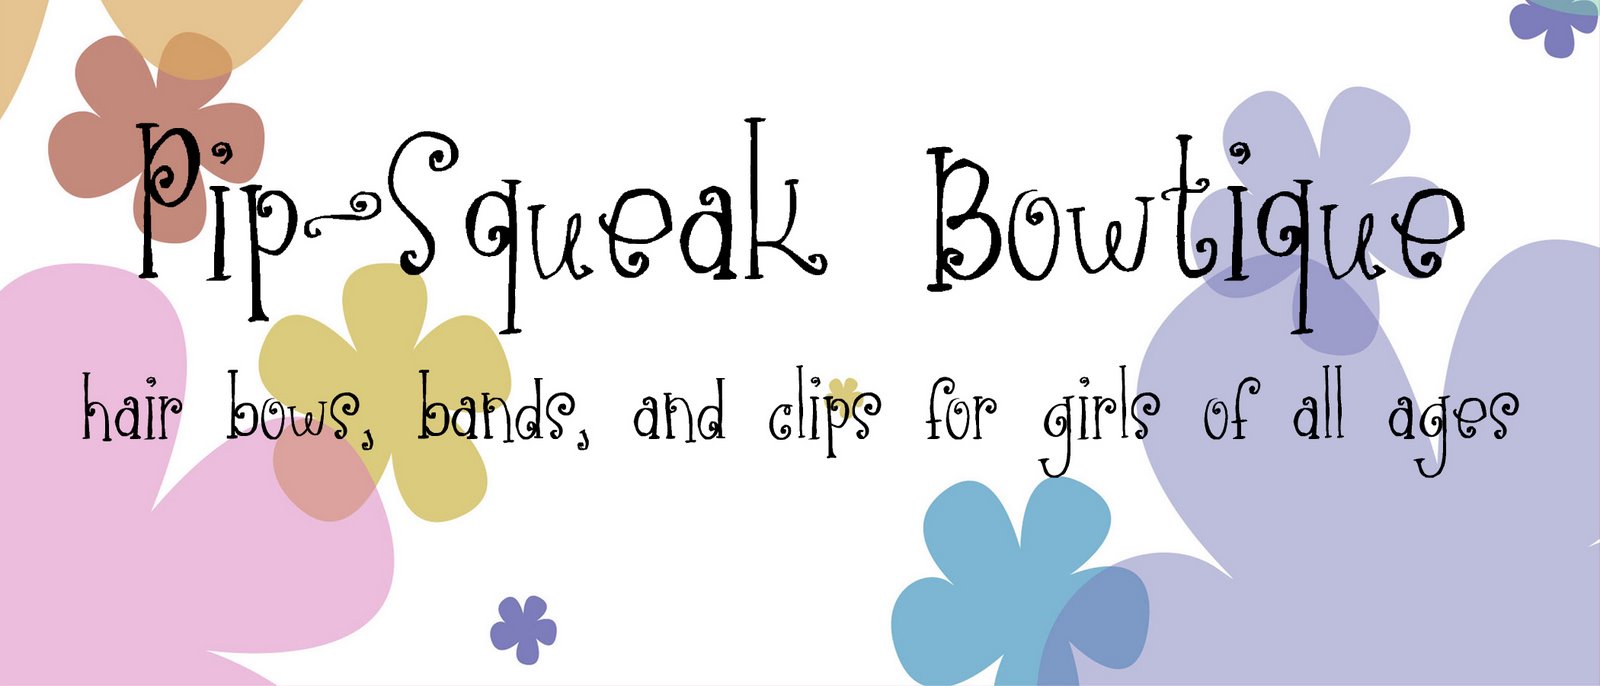 Pip-Squeak Bowtique Basic Bows